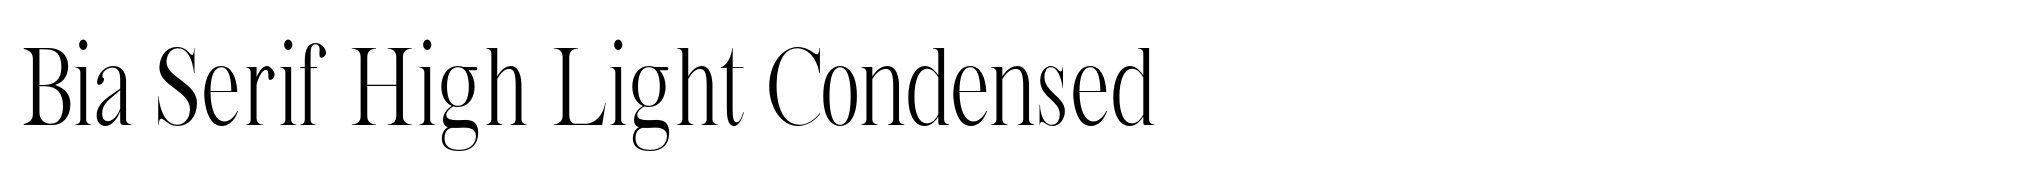 Bia Serif High Light Condensed image